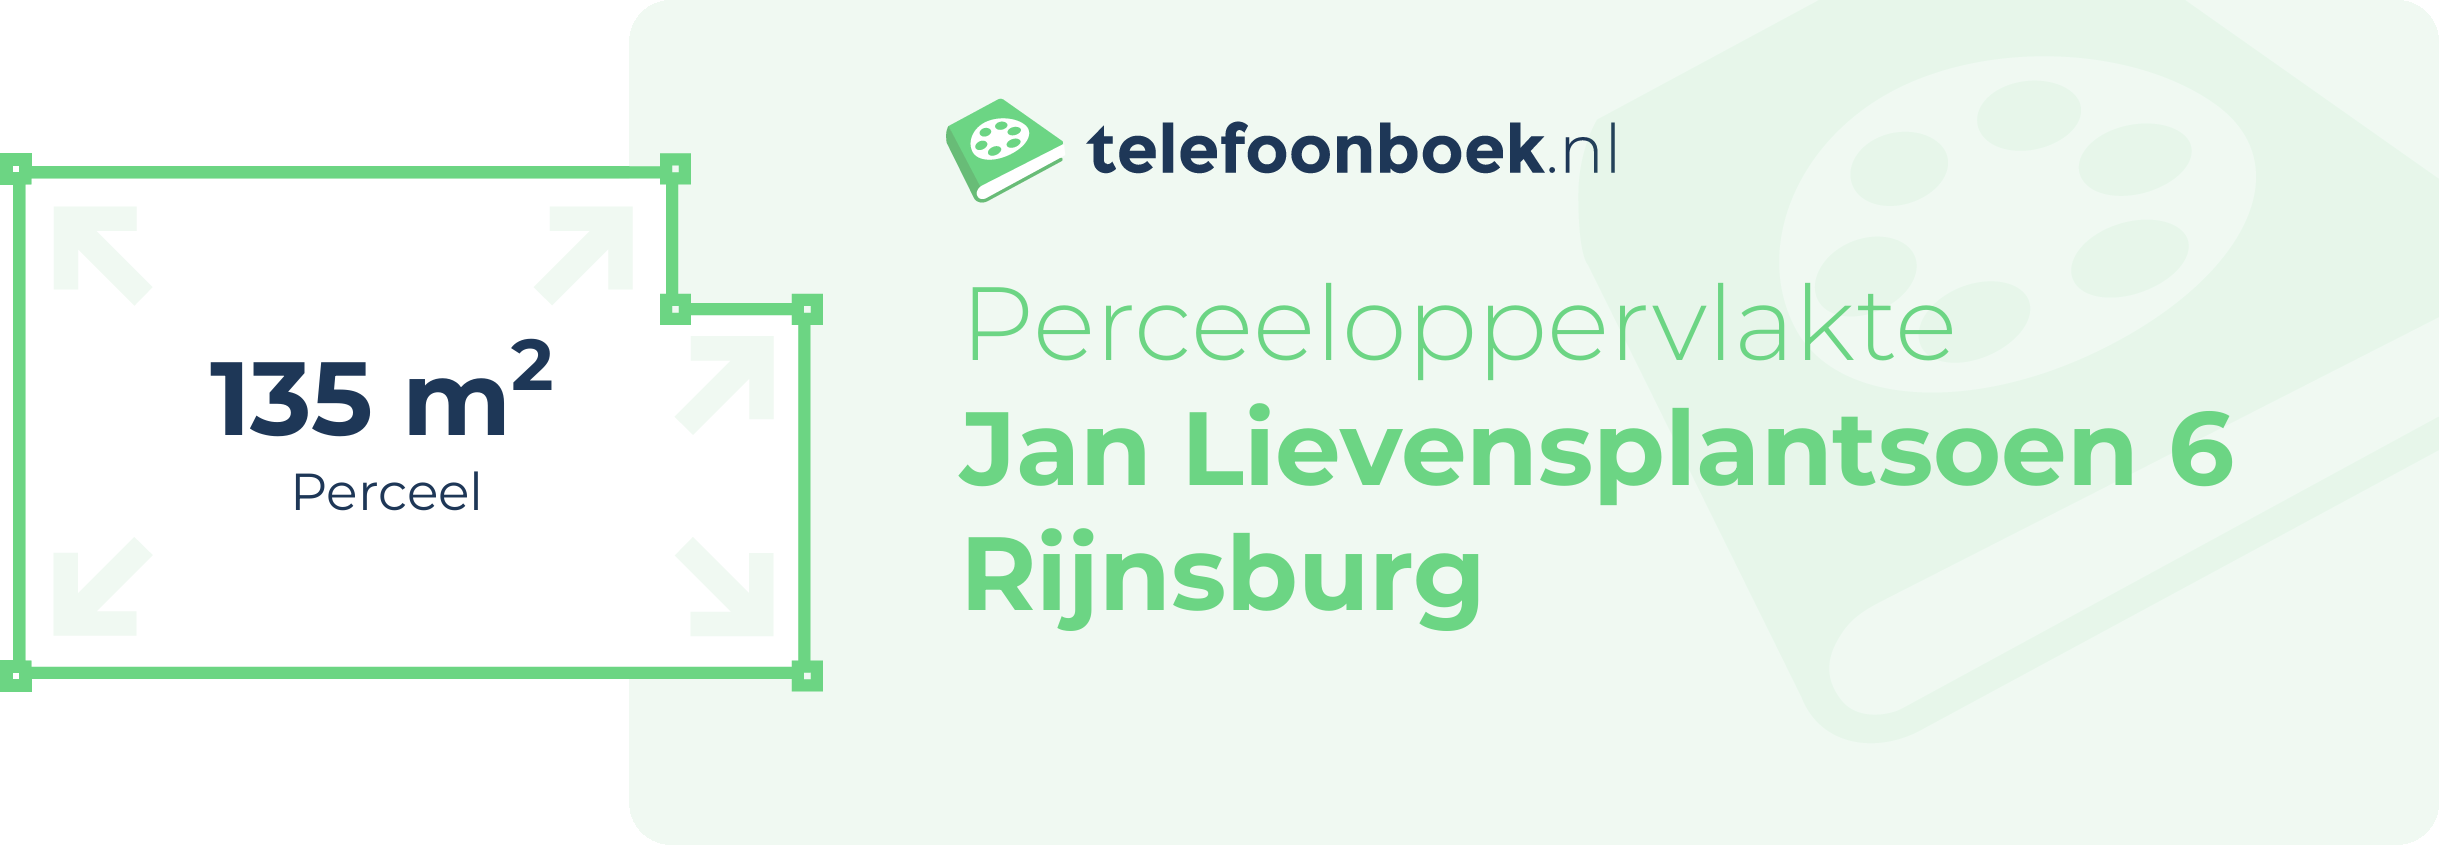 Perceeloppervlakte Jan Lievensplantsoen 6 Rijnsburg